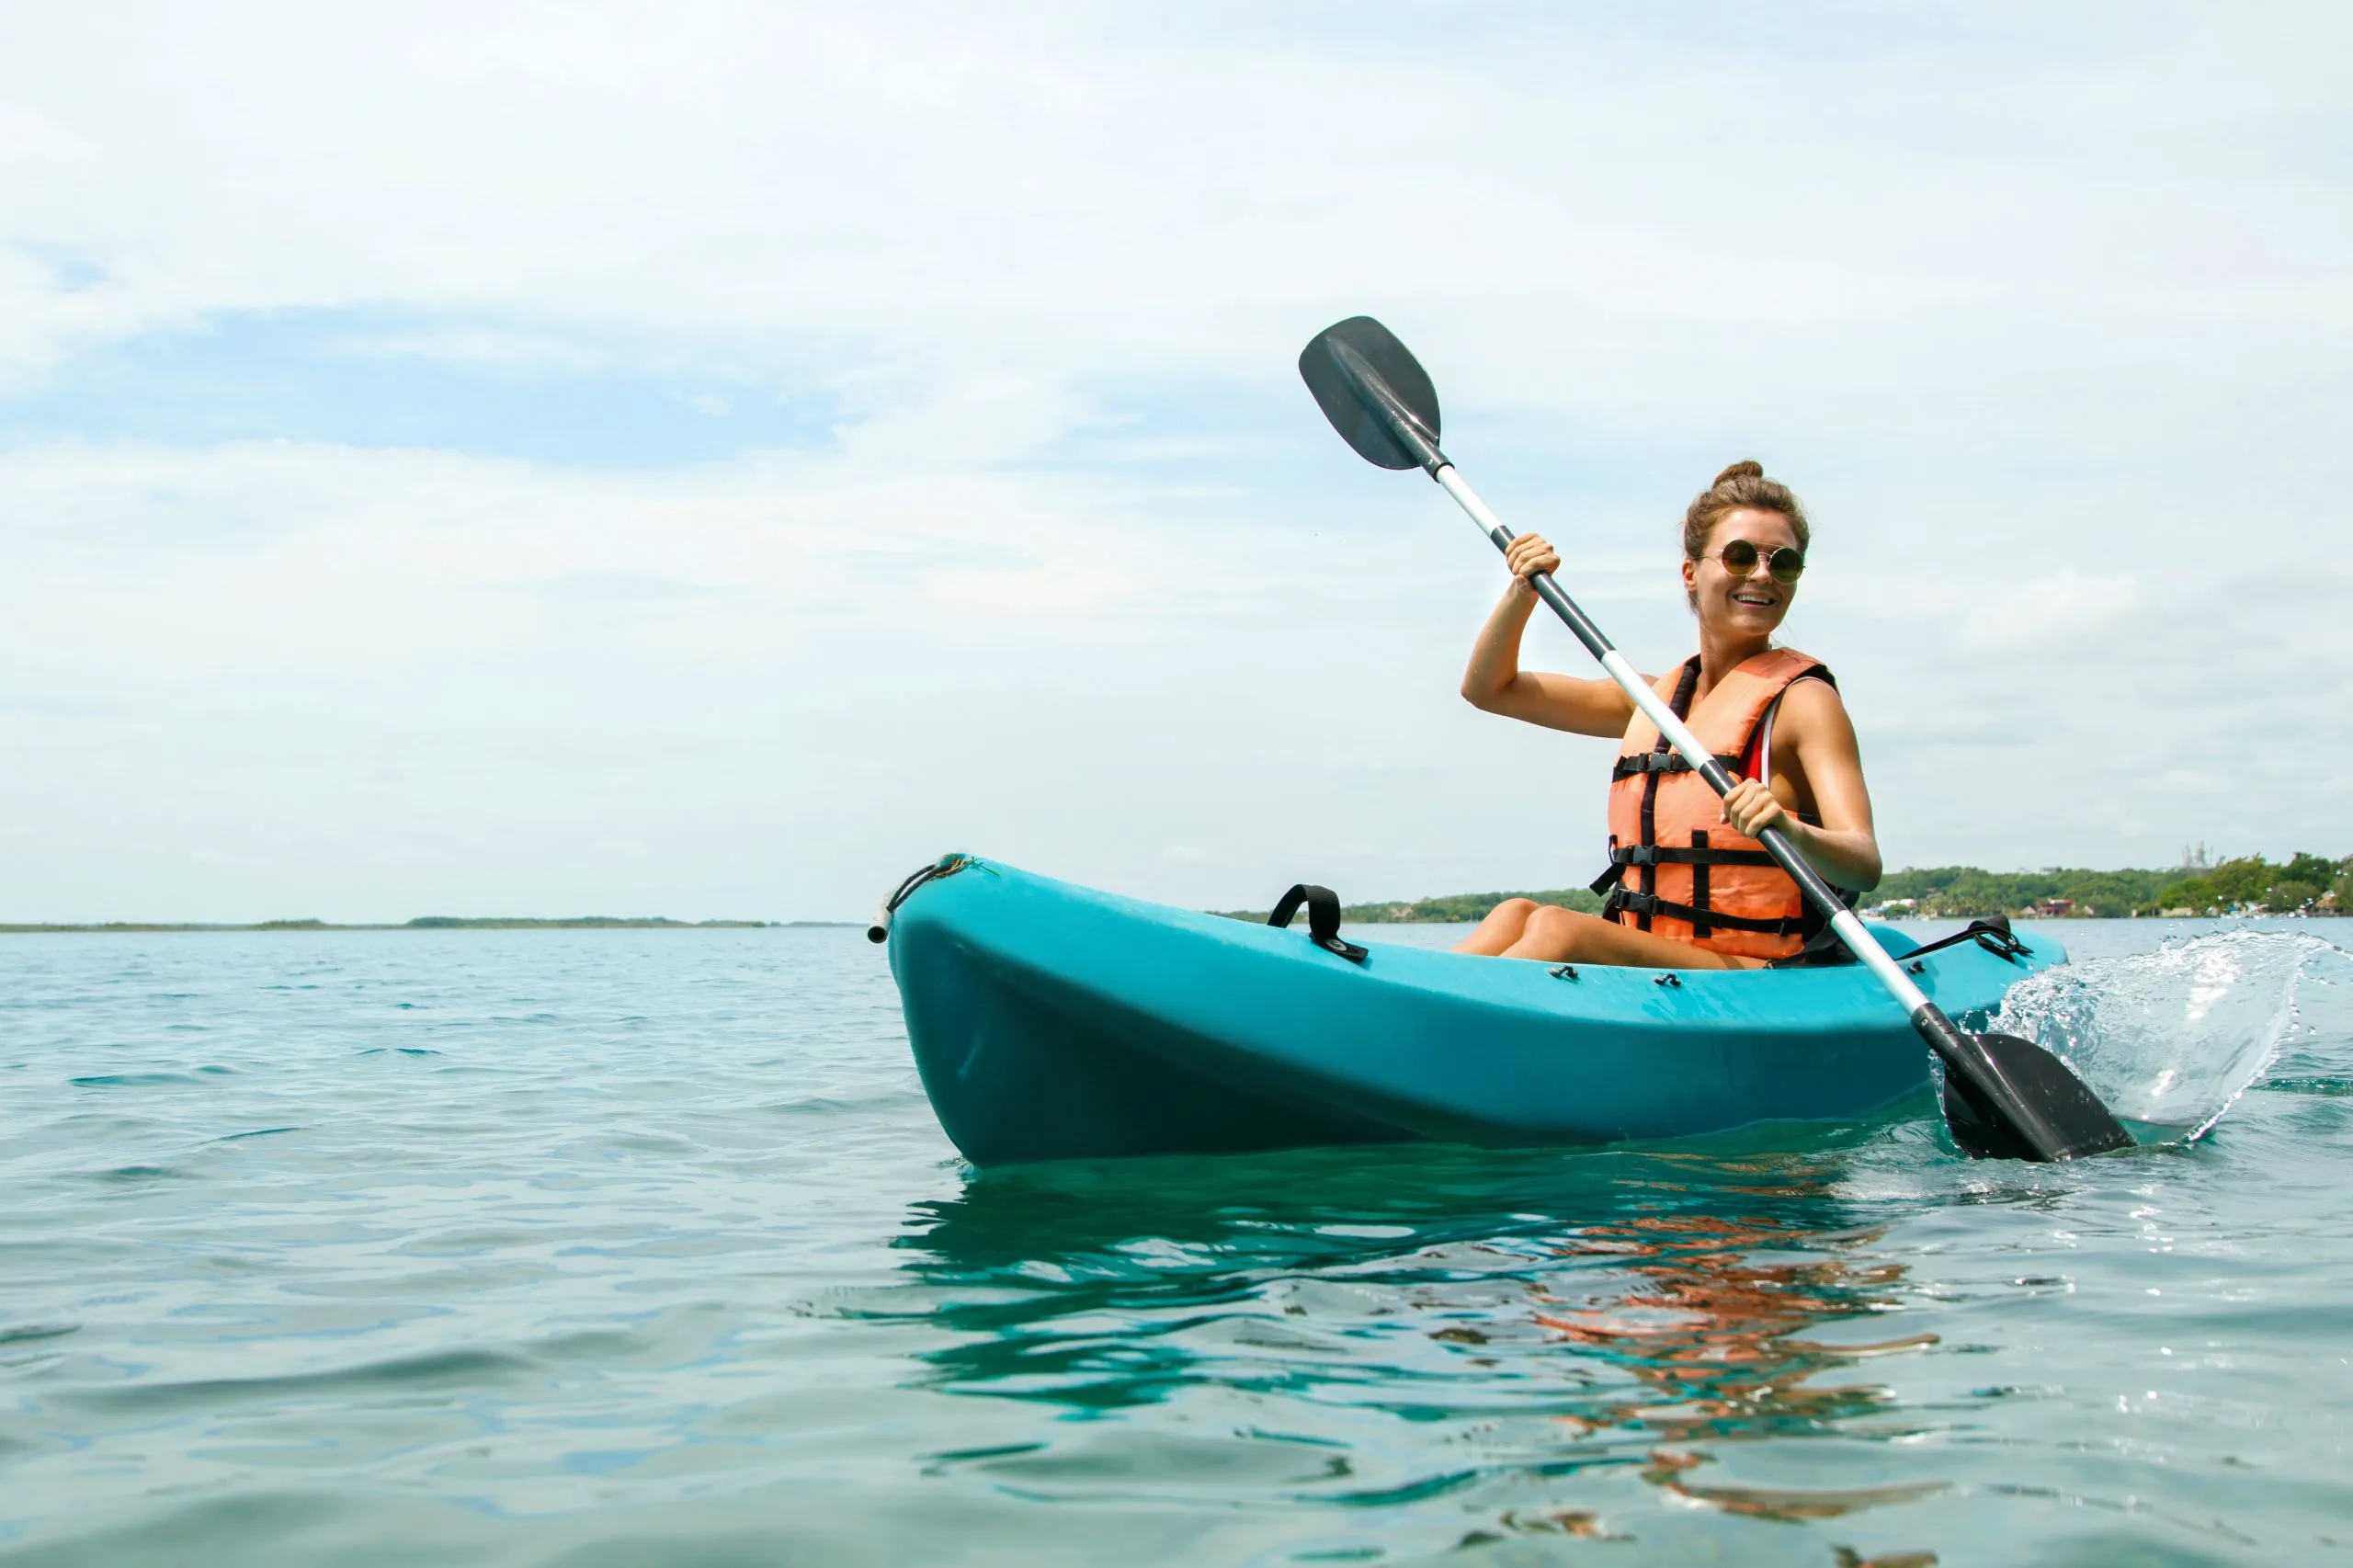 Happy young woman kayaking on the lake